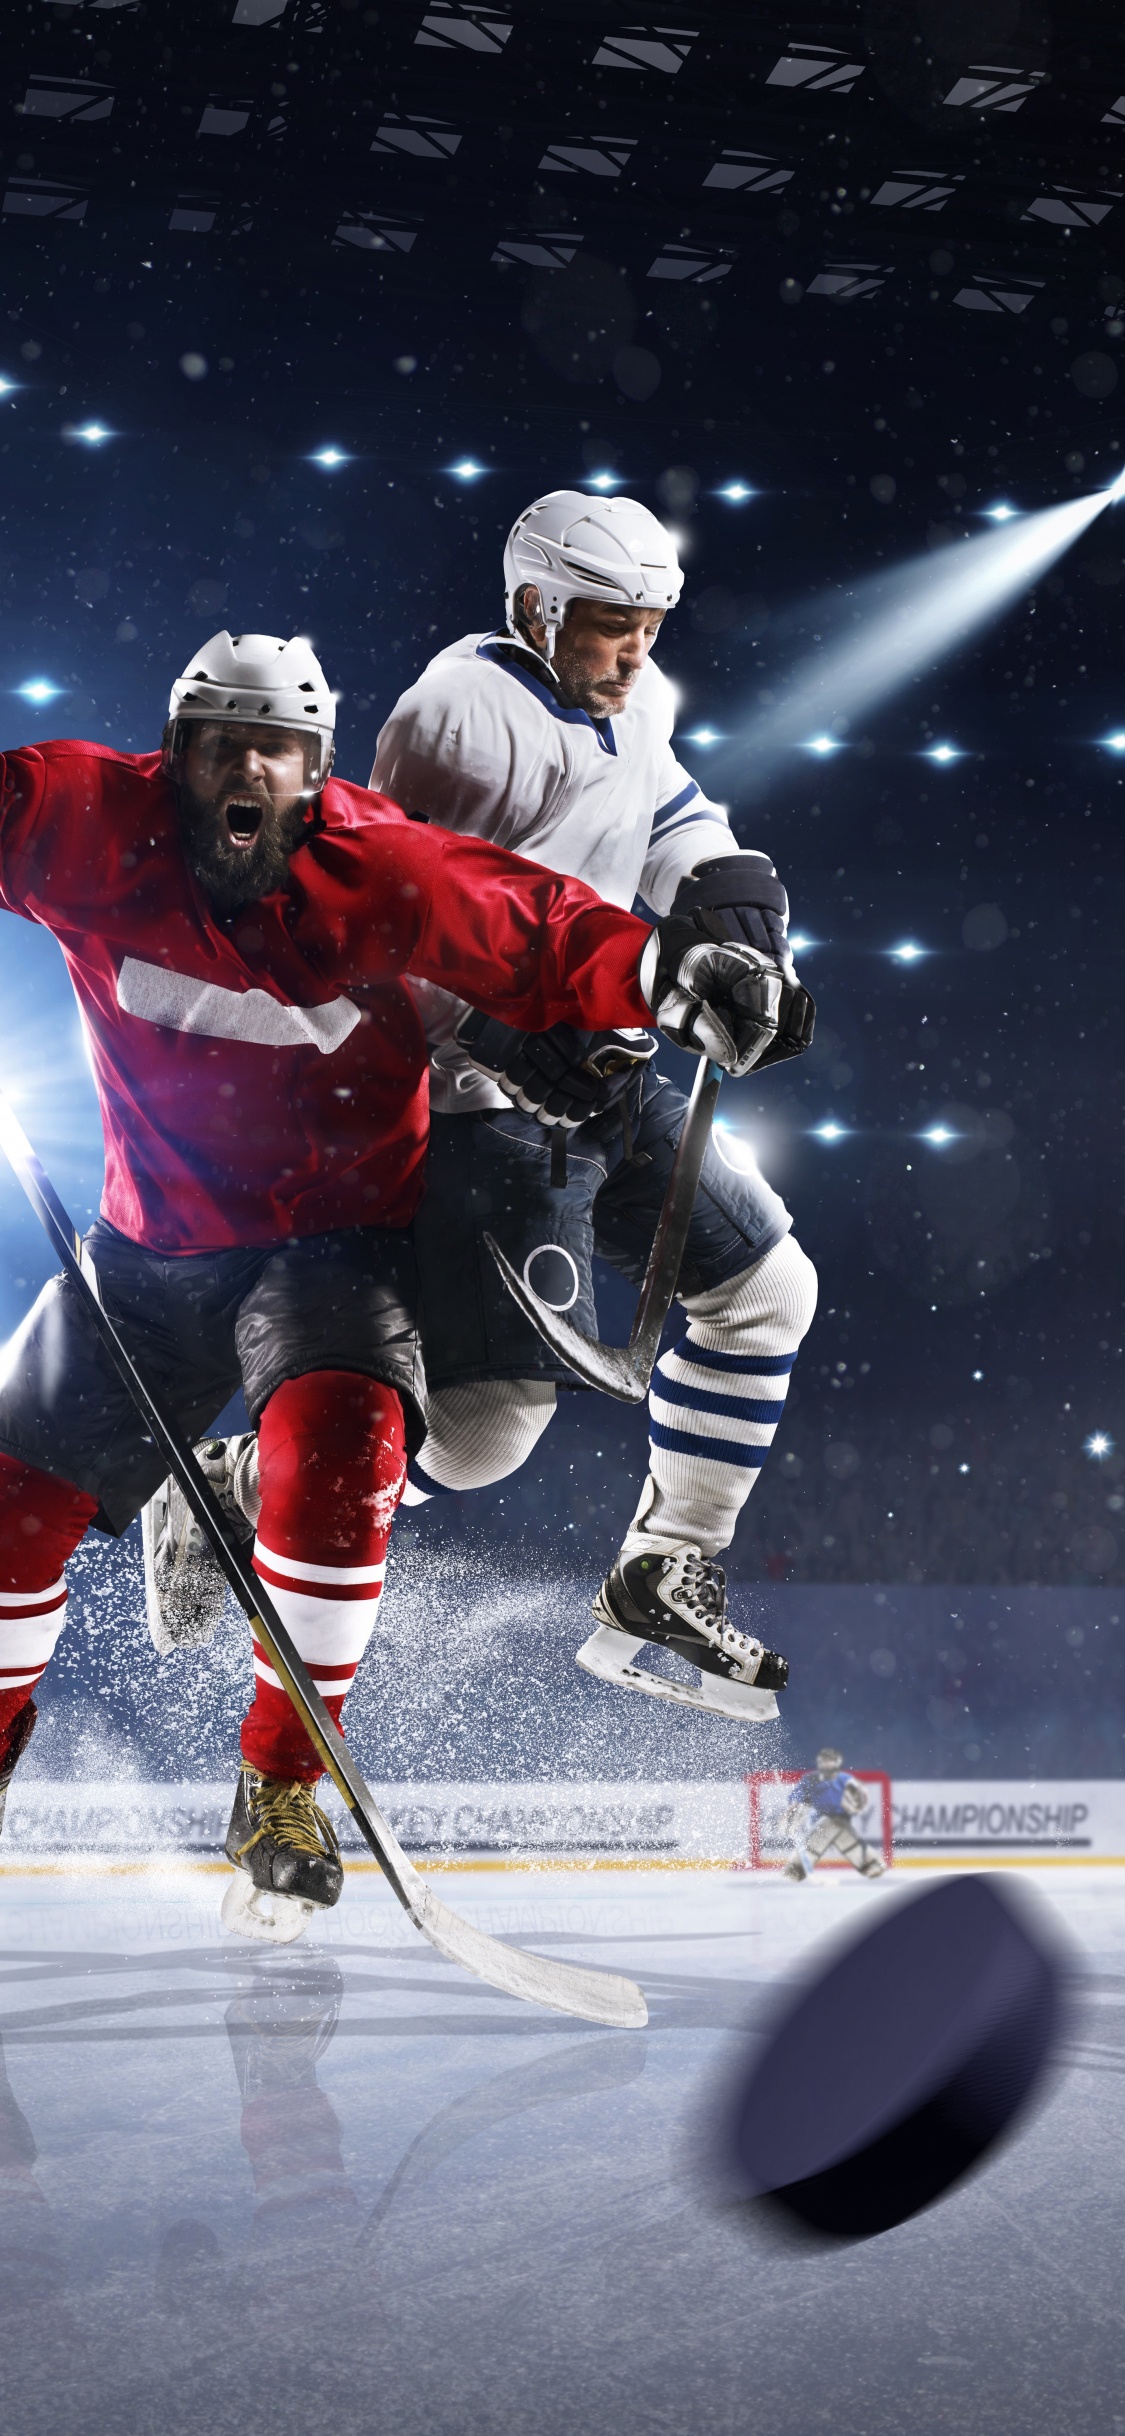 Ice Hockey Players on Ice Hockey Field. Wallpaper in 1125x2436 Resolution